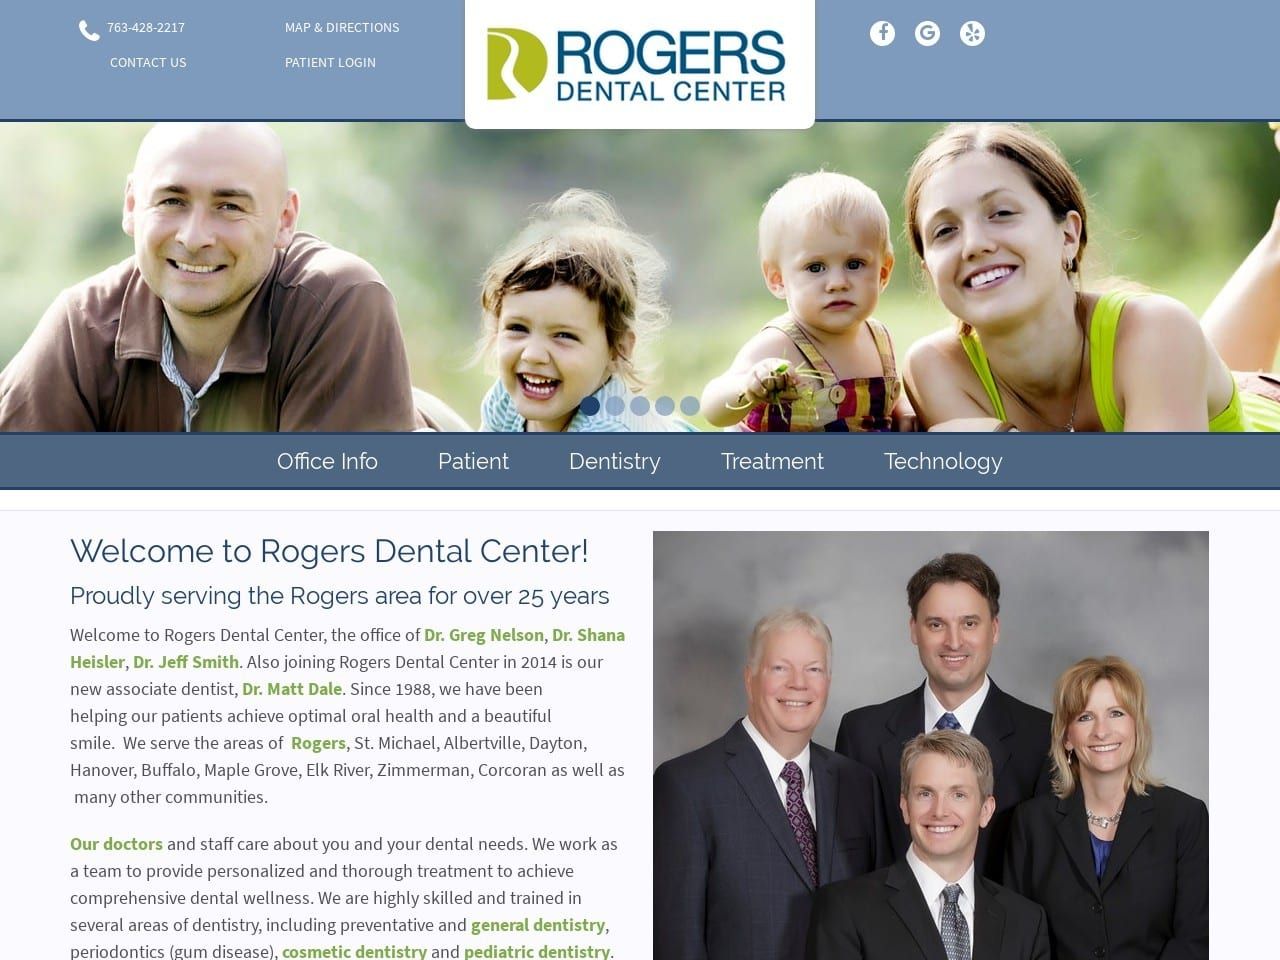 Rogers Dental Center Website Screenshot from rogersdentalcenter.com